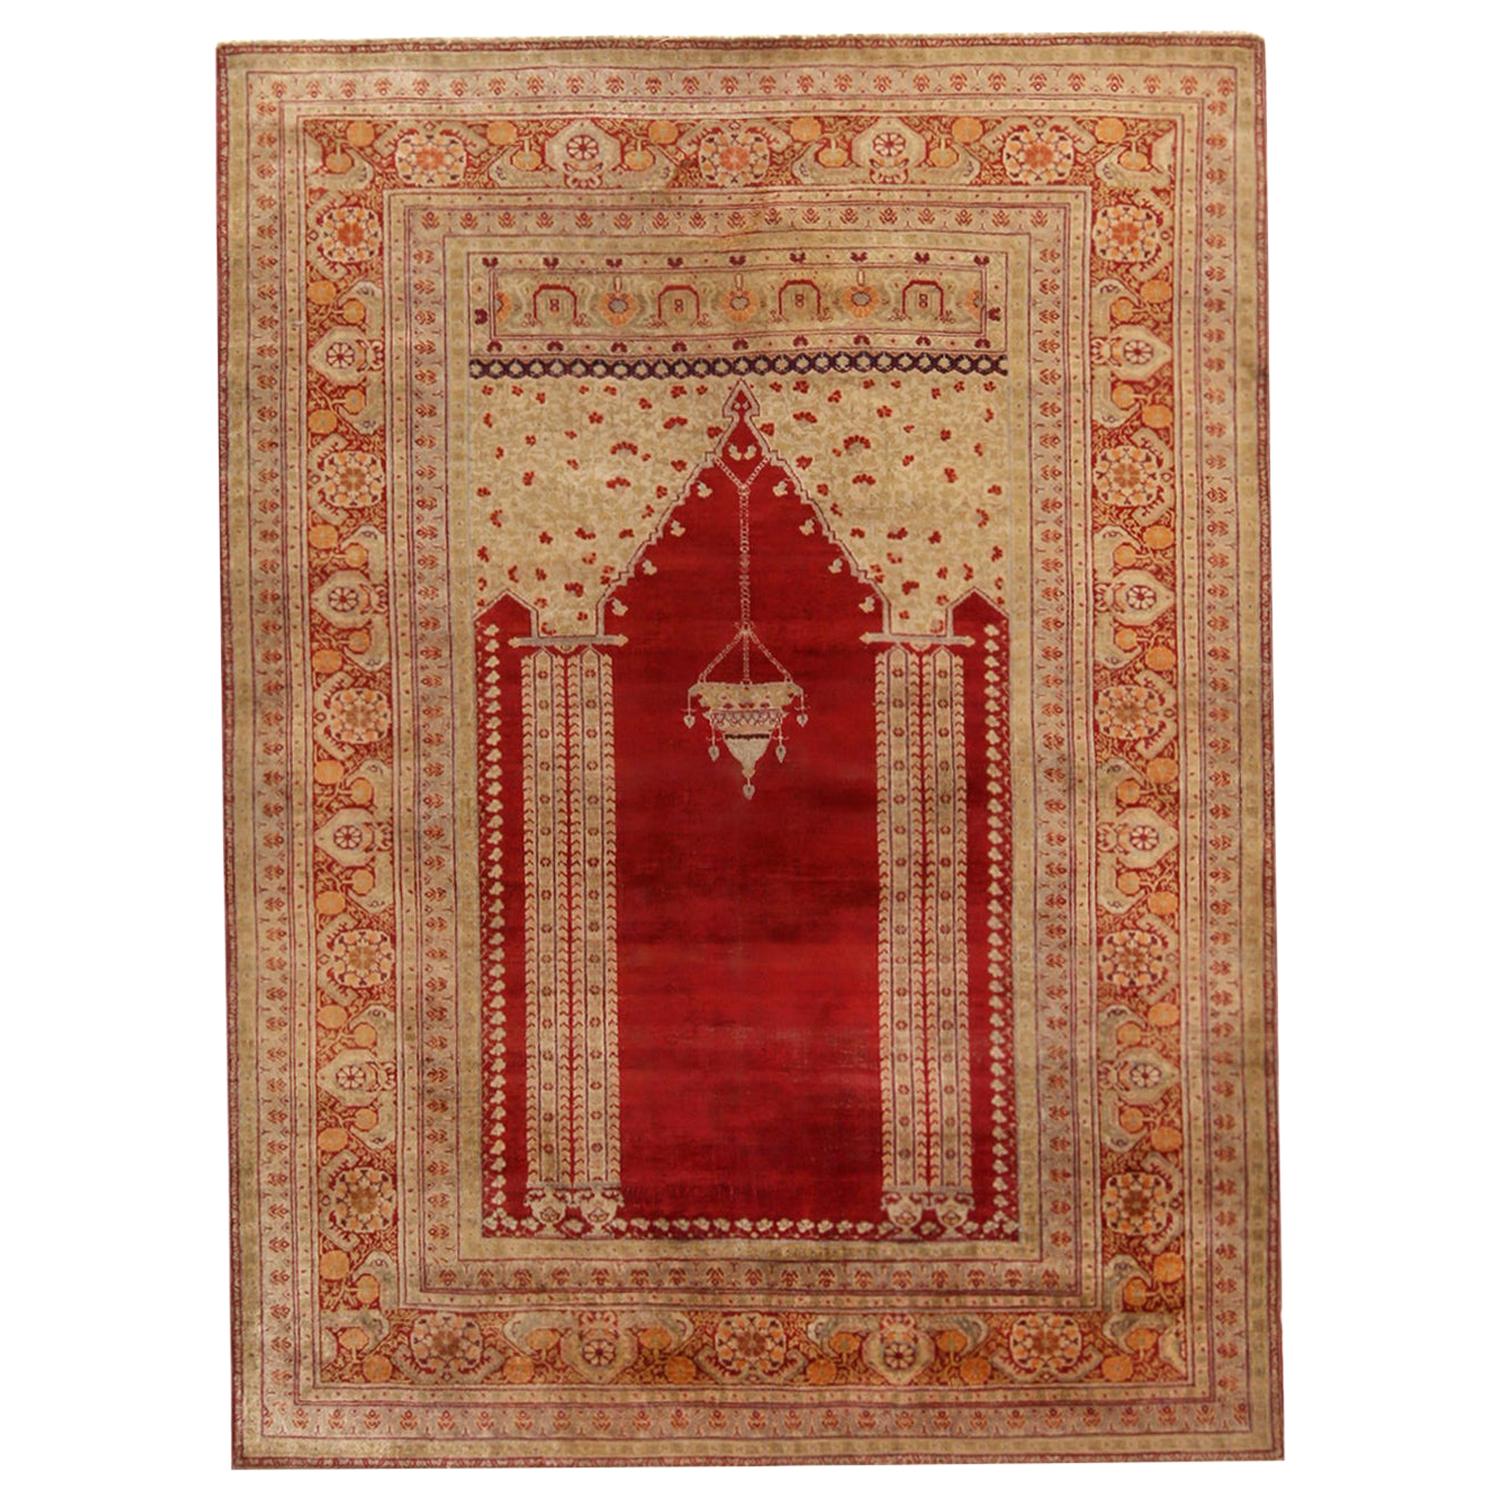 Antique Kayseri Crimson Red and Beige Geometric-Floral Wool Rug by Rug & Kilim For Sale